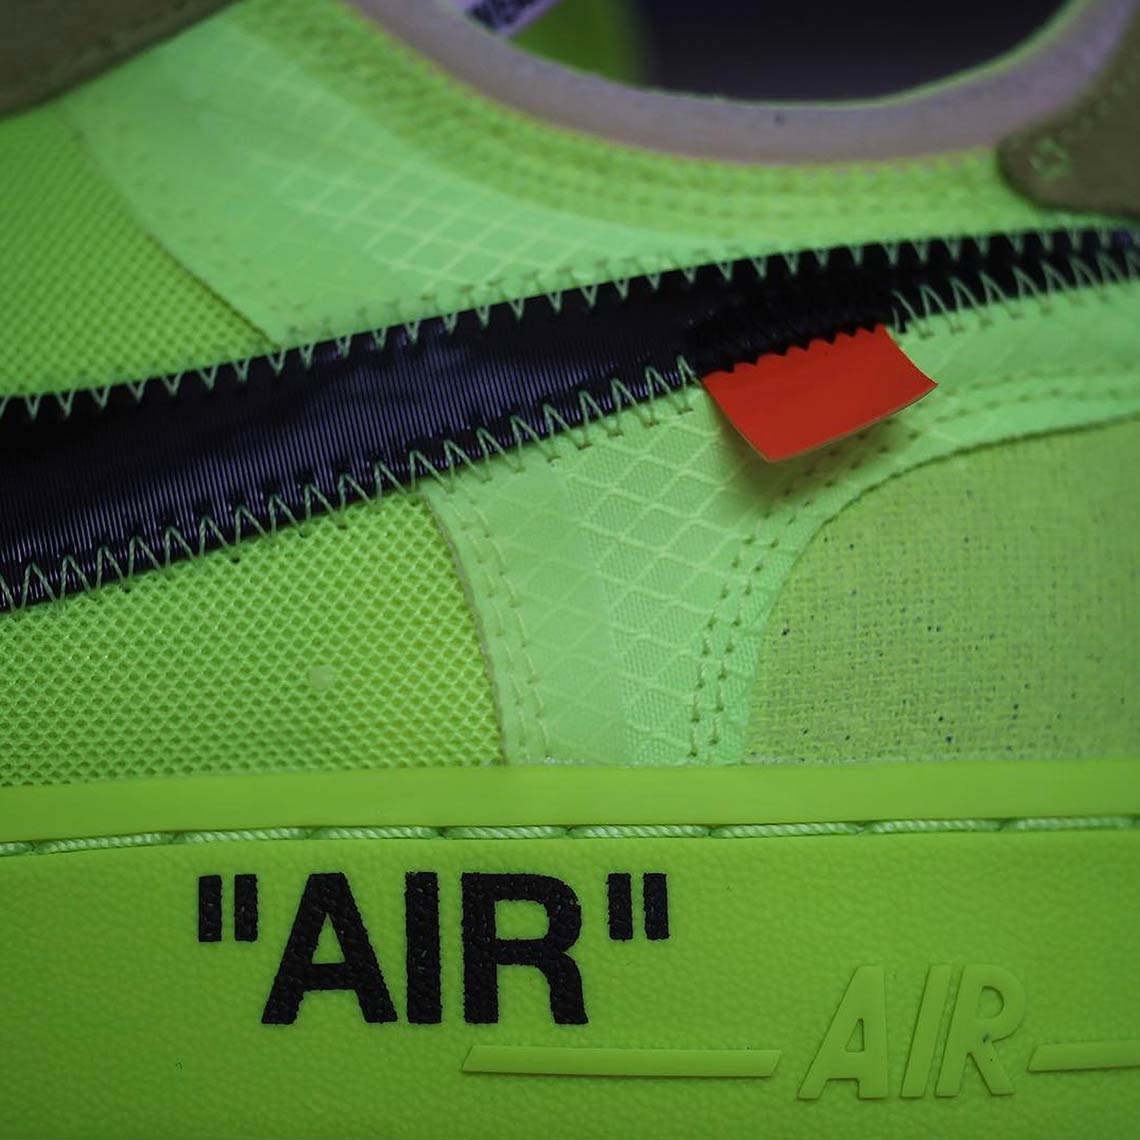 Nike Nike x Off-White Air Force 1 Volt “The Ten”